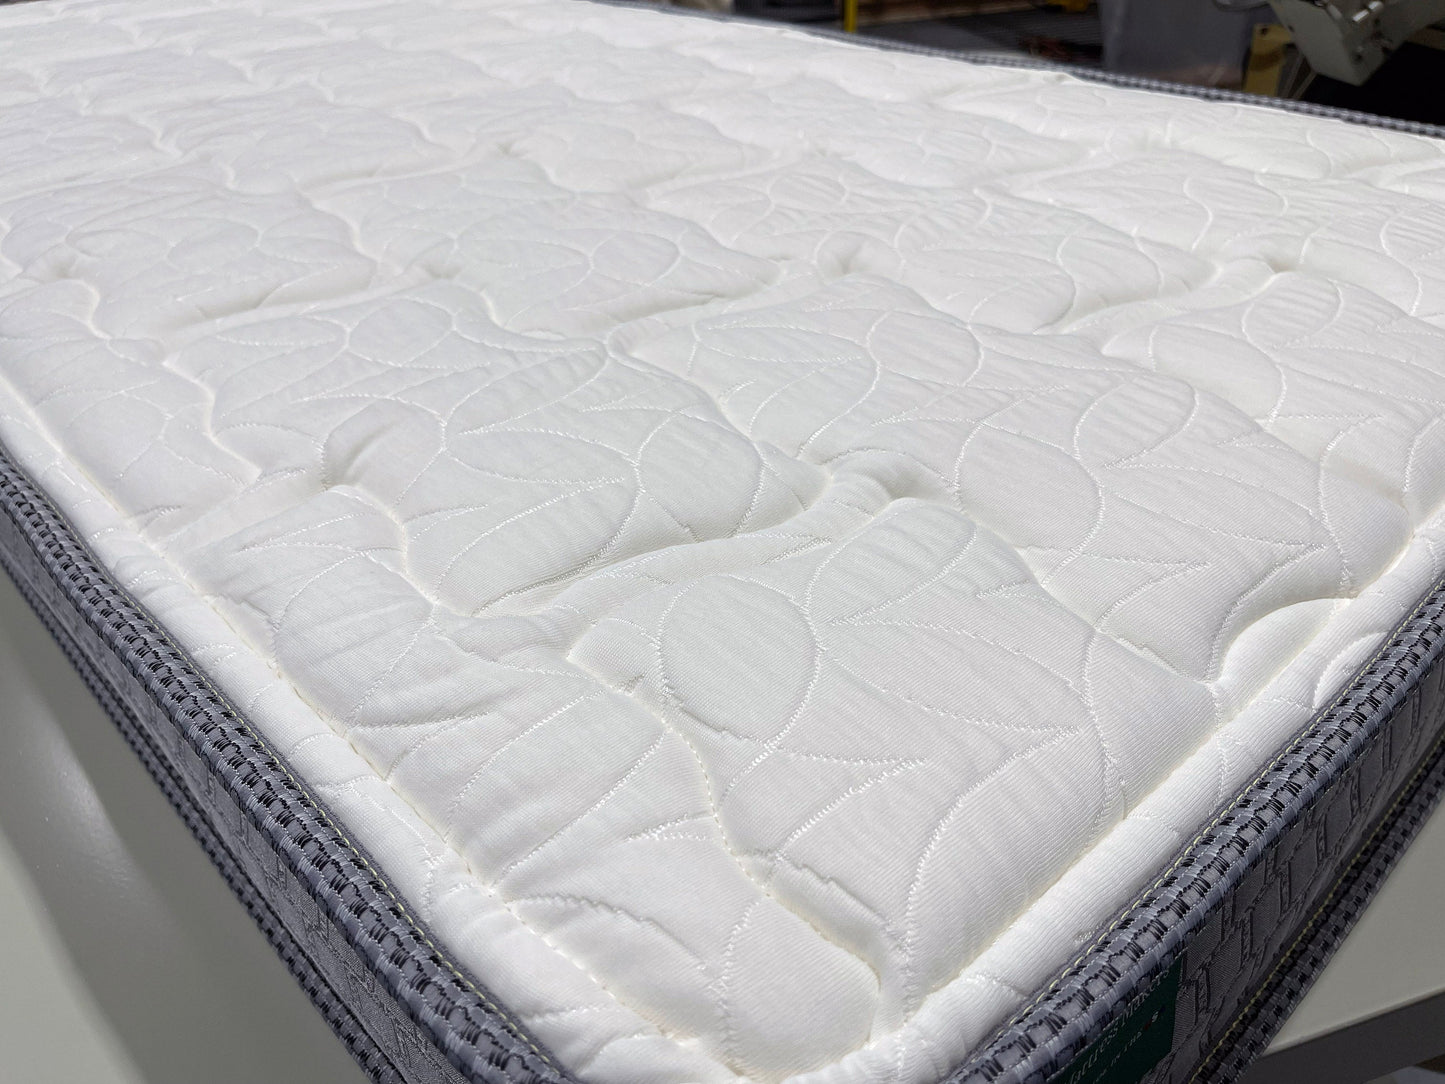 Largo - 32" x 76" x 5" mattress